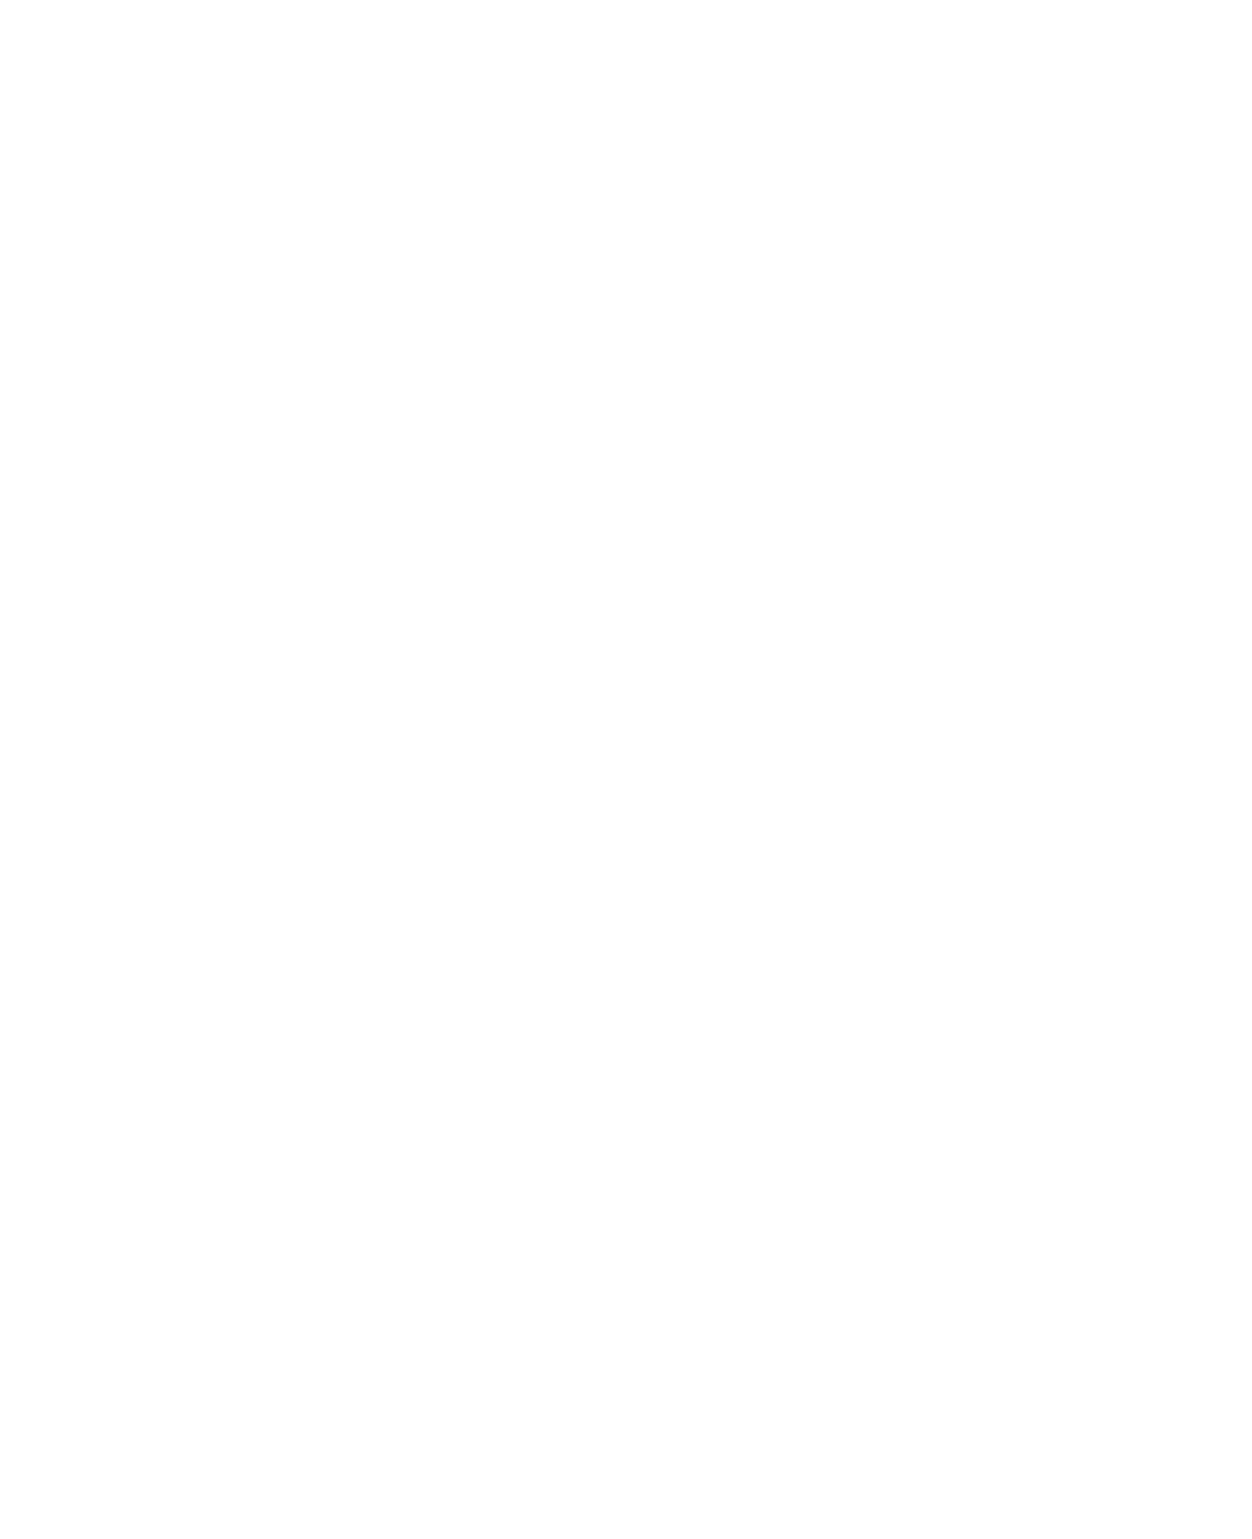 Principal Exchange-Traded Funds logo for dark backgrounds (transparent PNG)